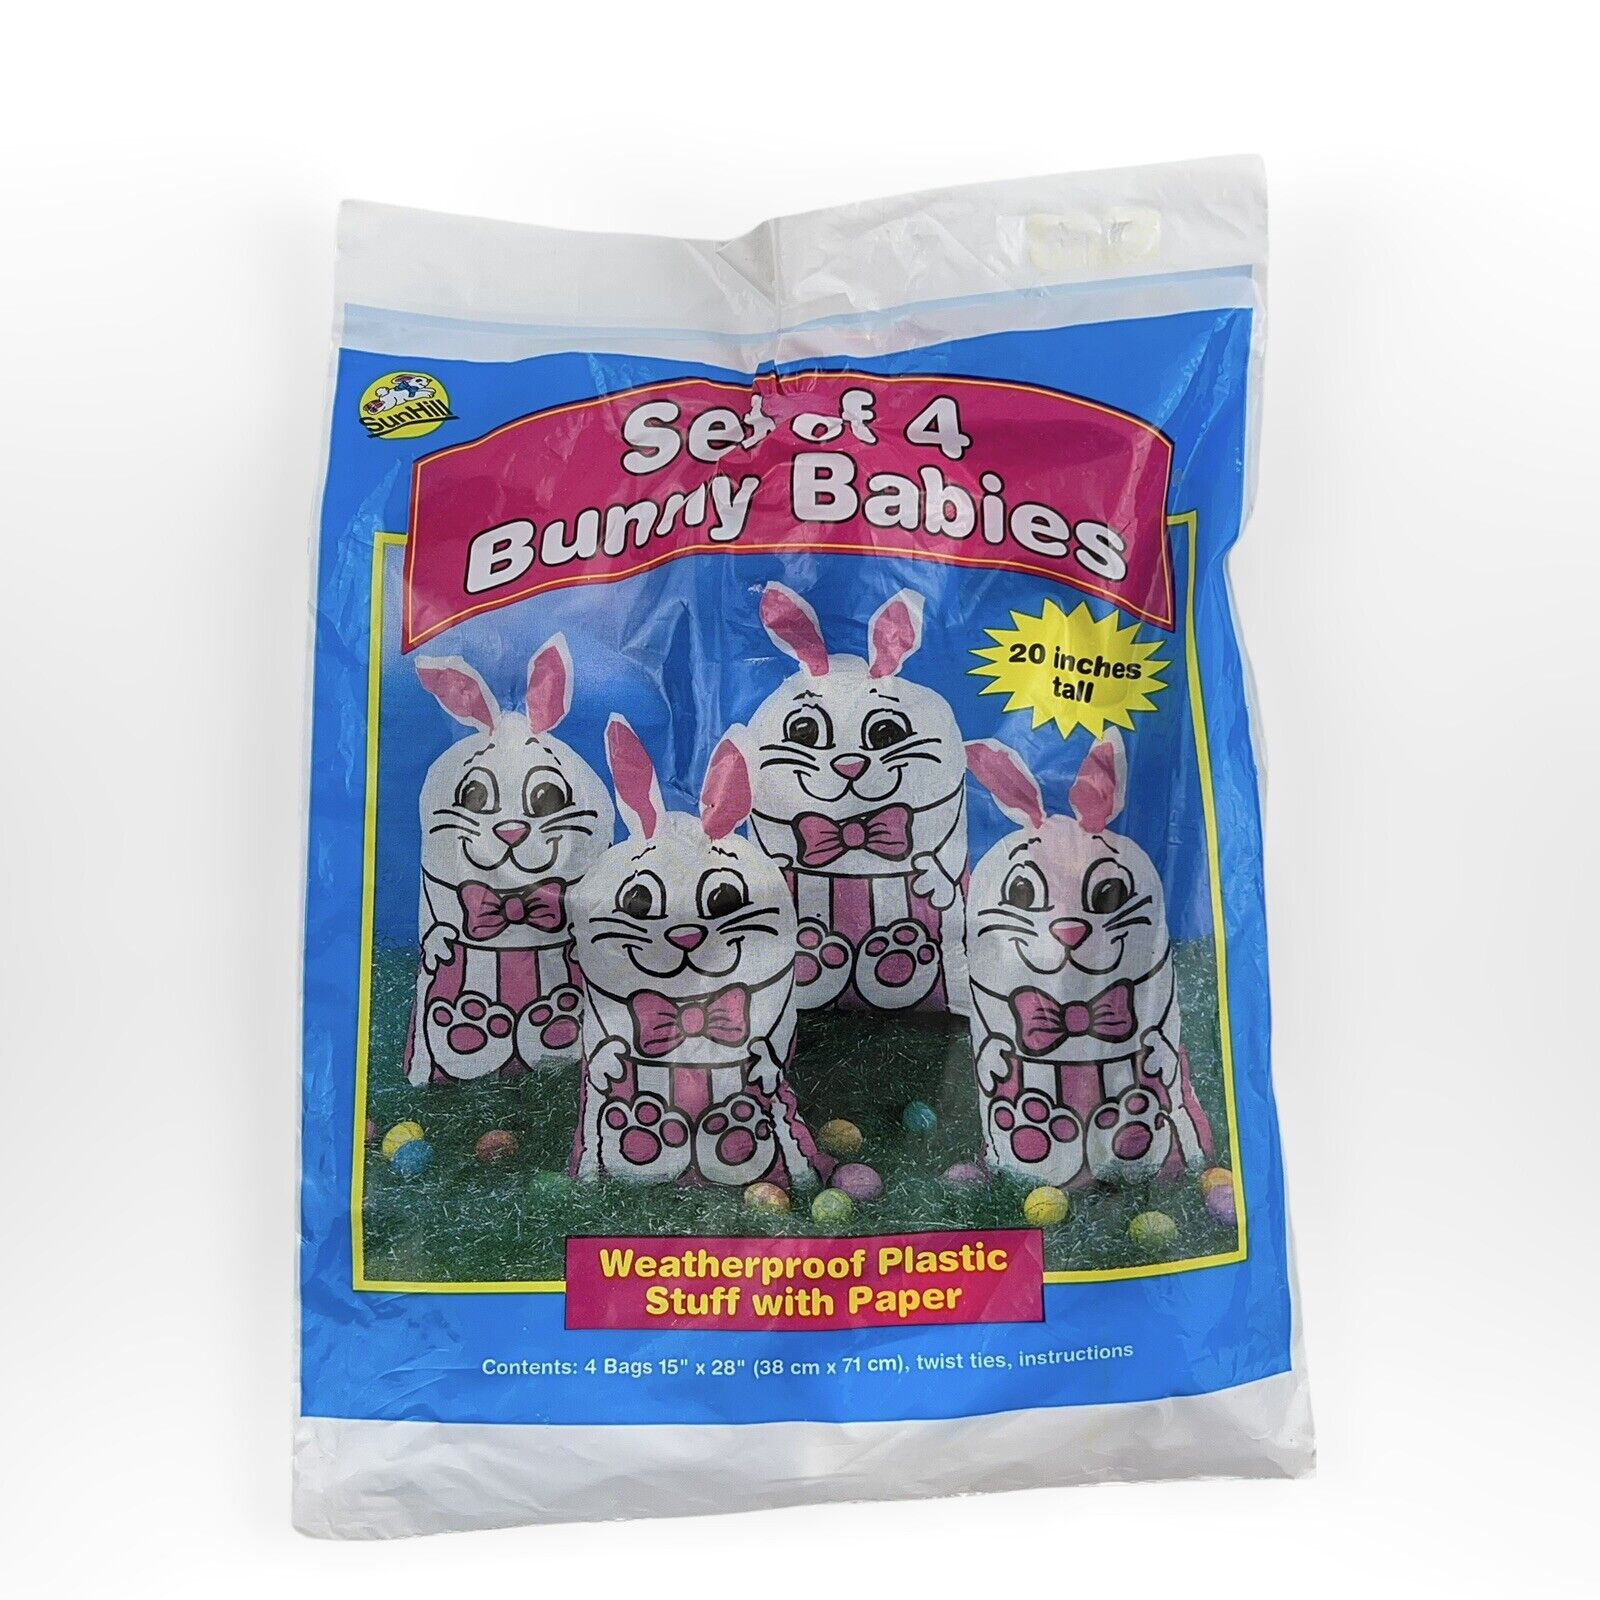 Vintage Sun Hill Bunny Babies 4 pack Lawn Decor 20” Open Bag Complete